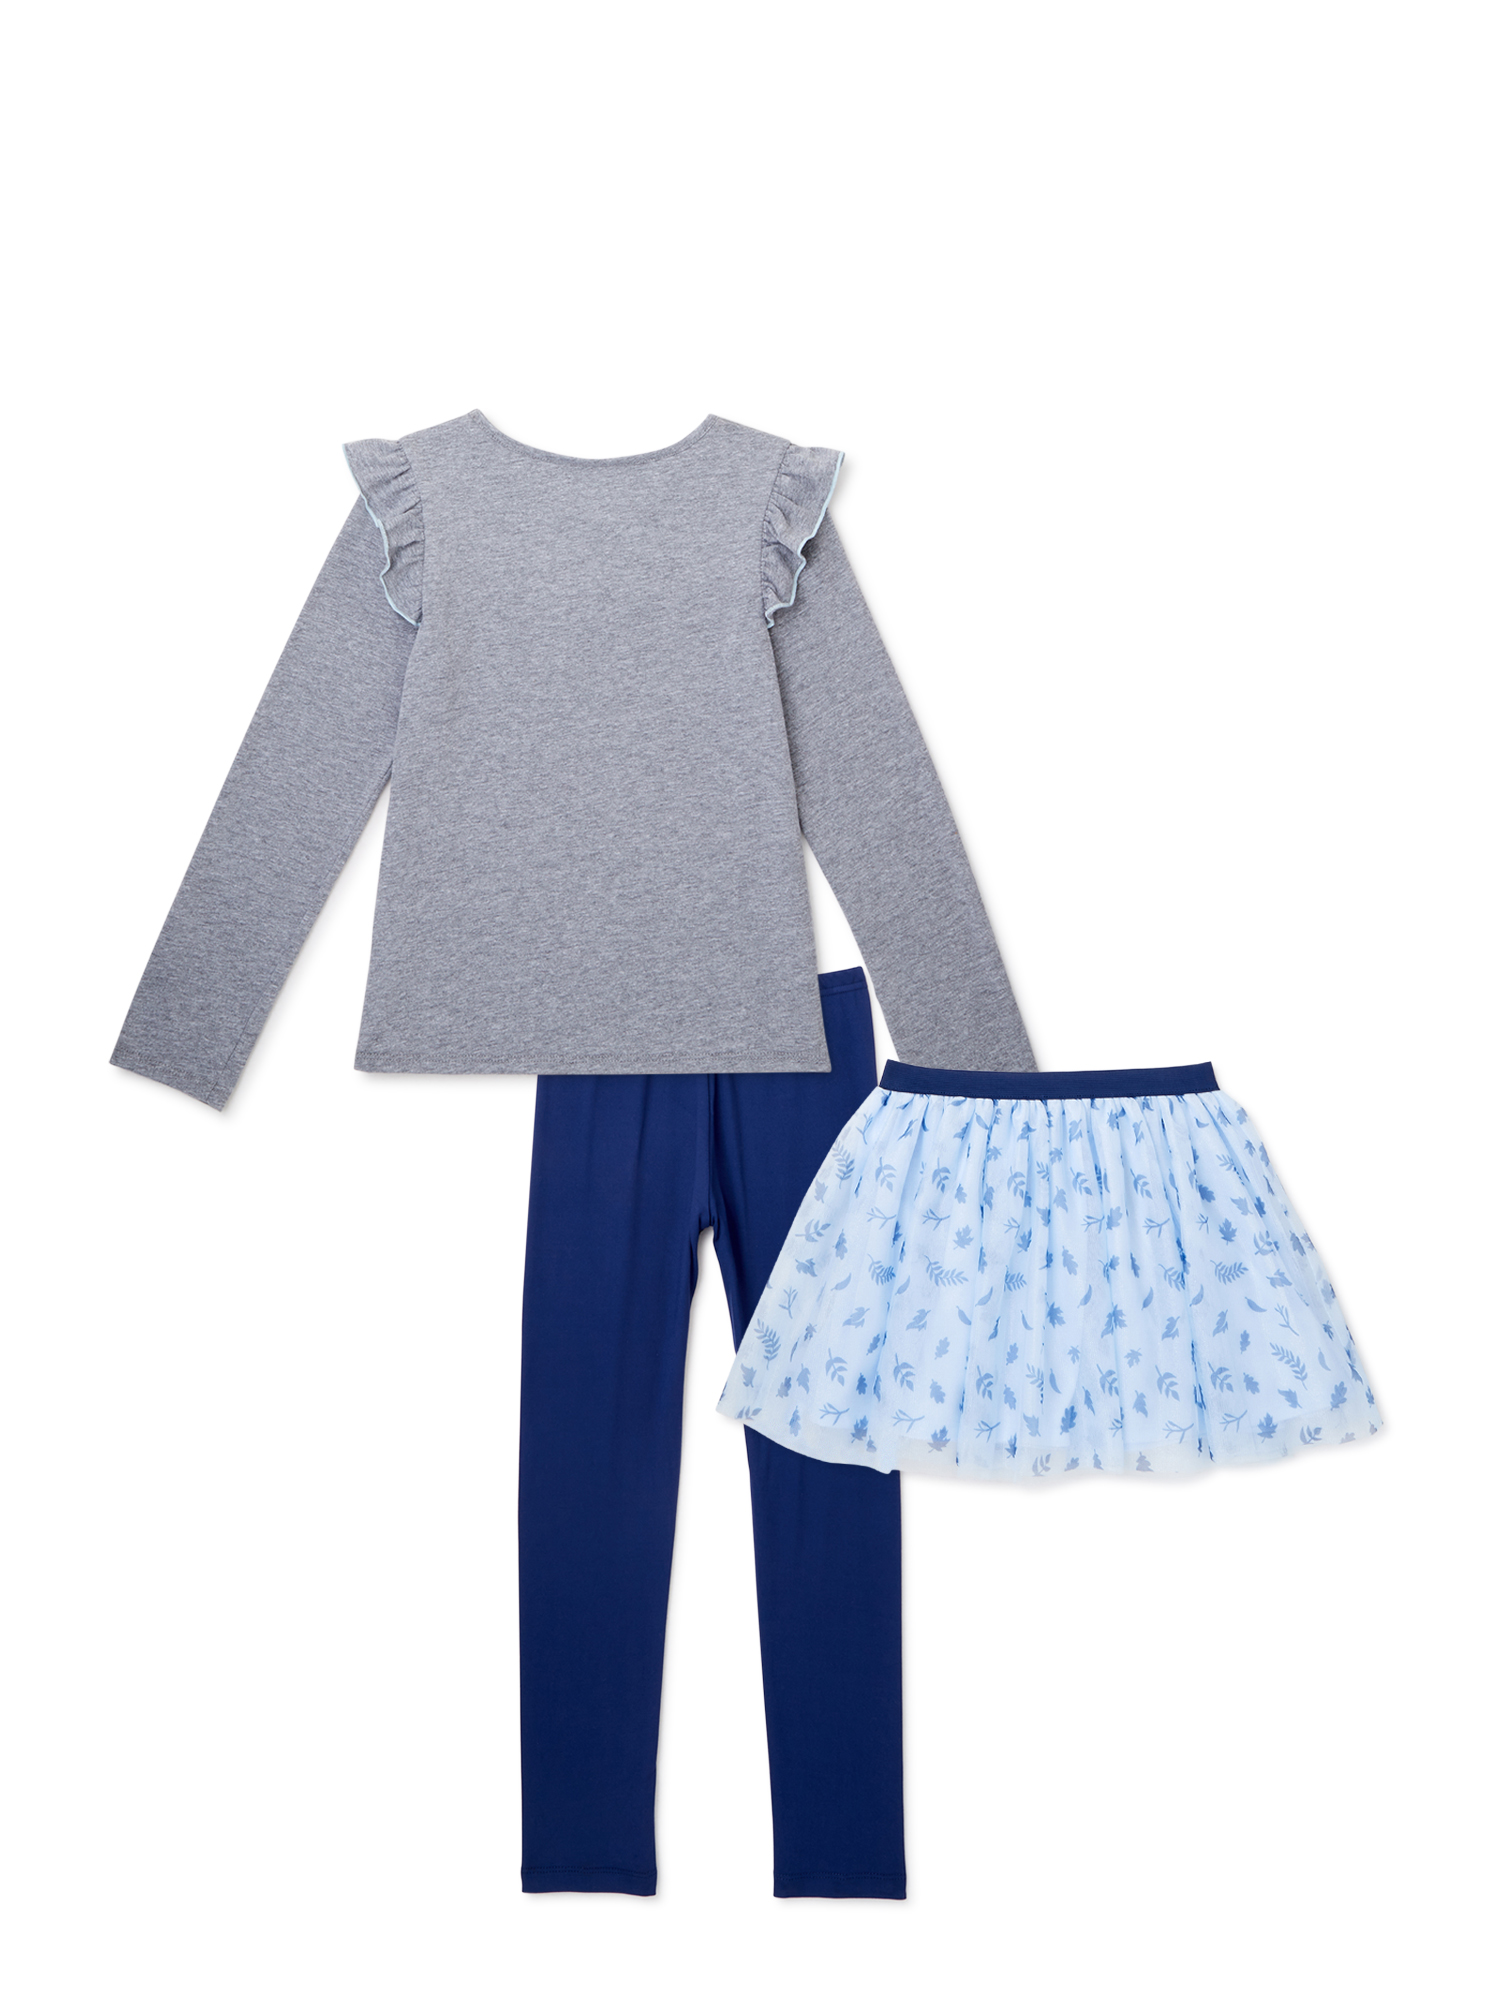 Frozen 2 Anna & Elsa Toddler Girl Long Sleeve Top, Tutu Skirt, Leggings & Headband, 4pc outfit set - image 2 of 3